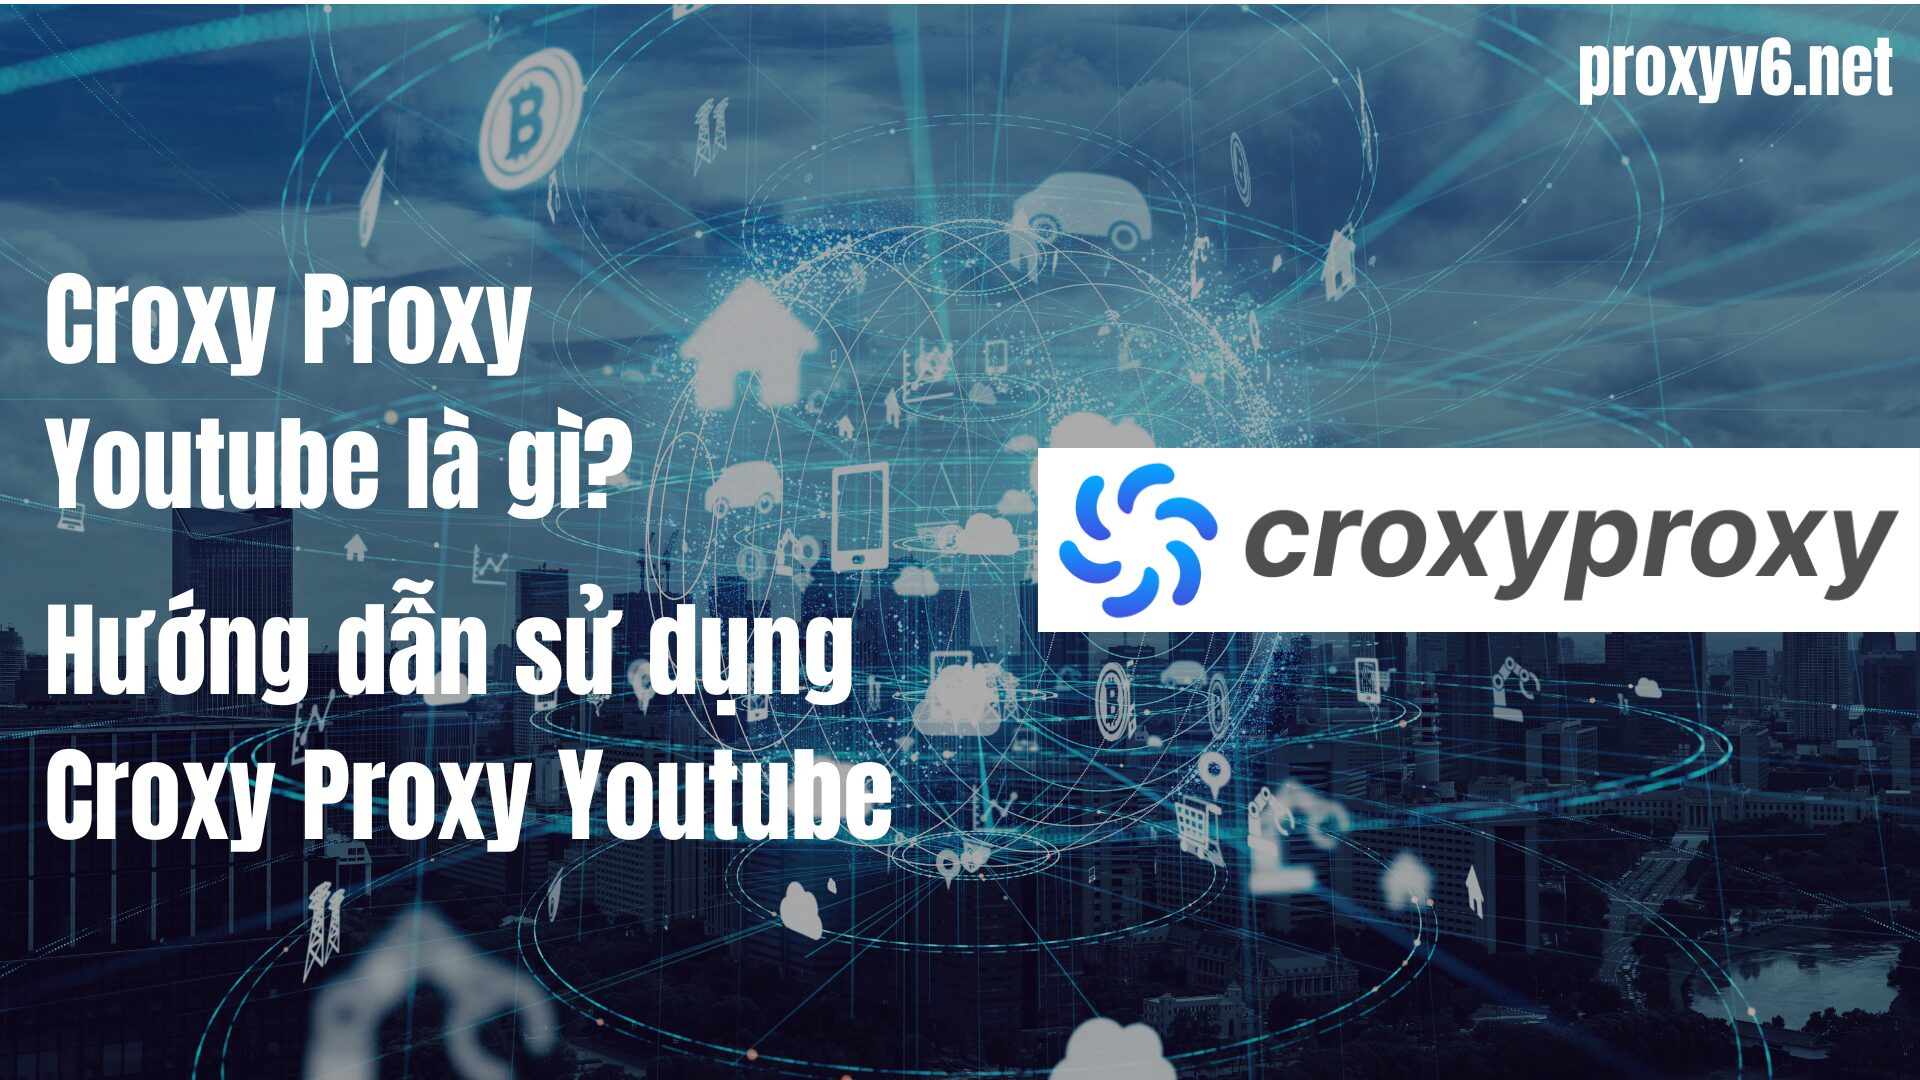 Croxy proxy youtube